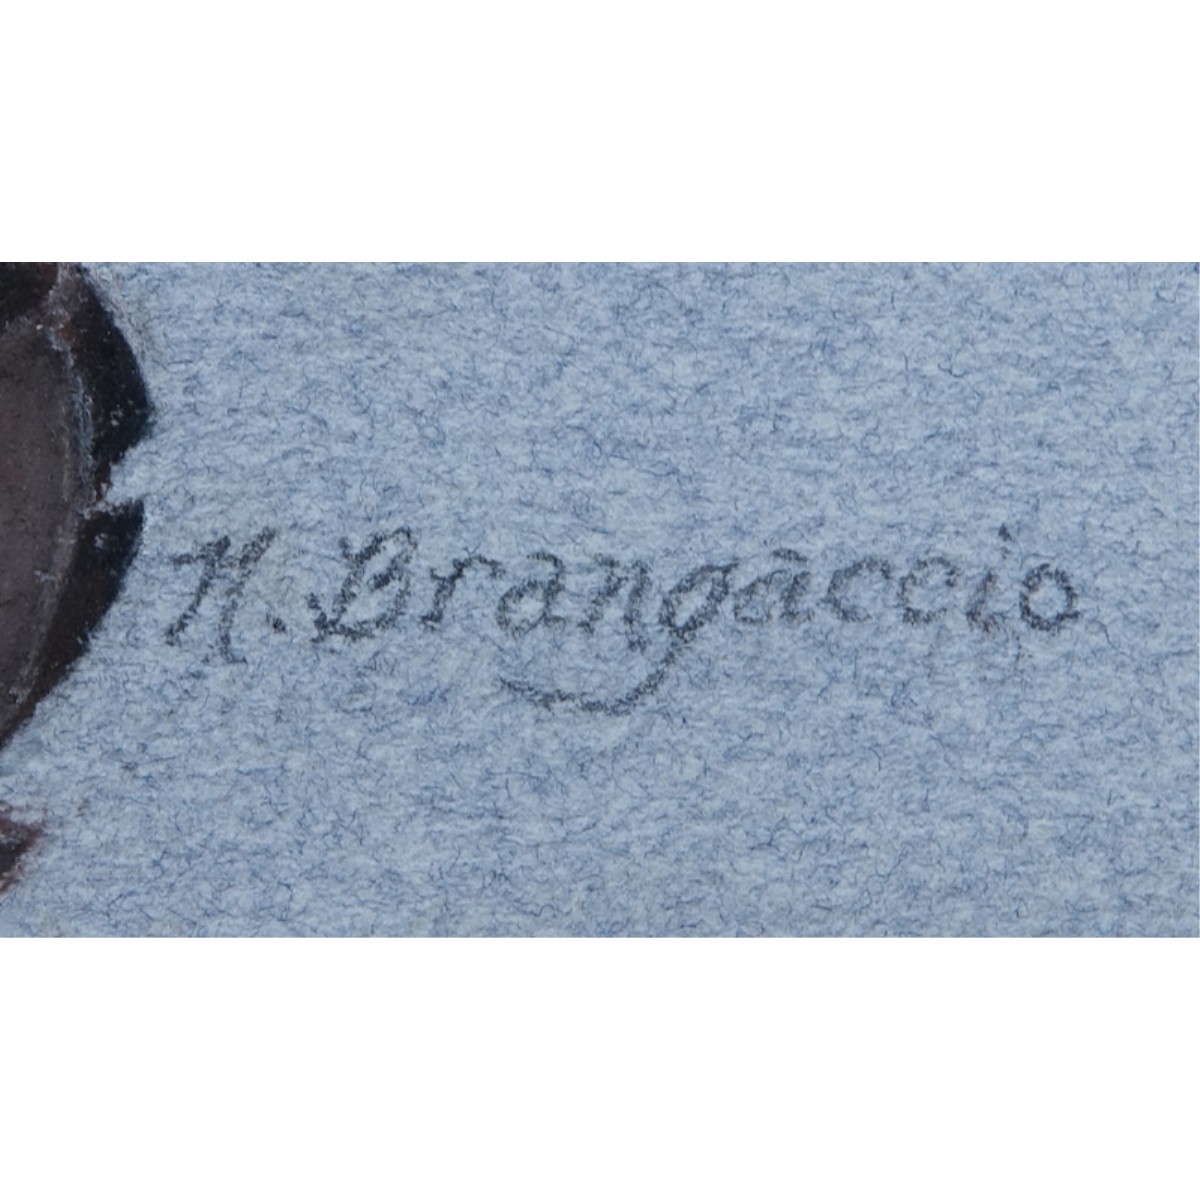 Nancy Brangaccio, American (20th Century) Pastel